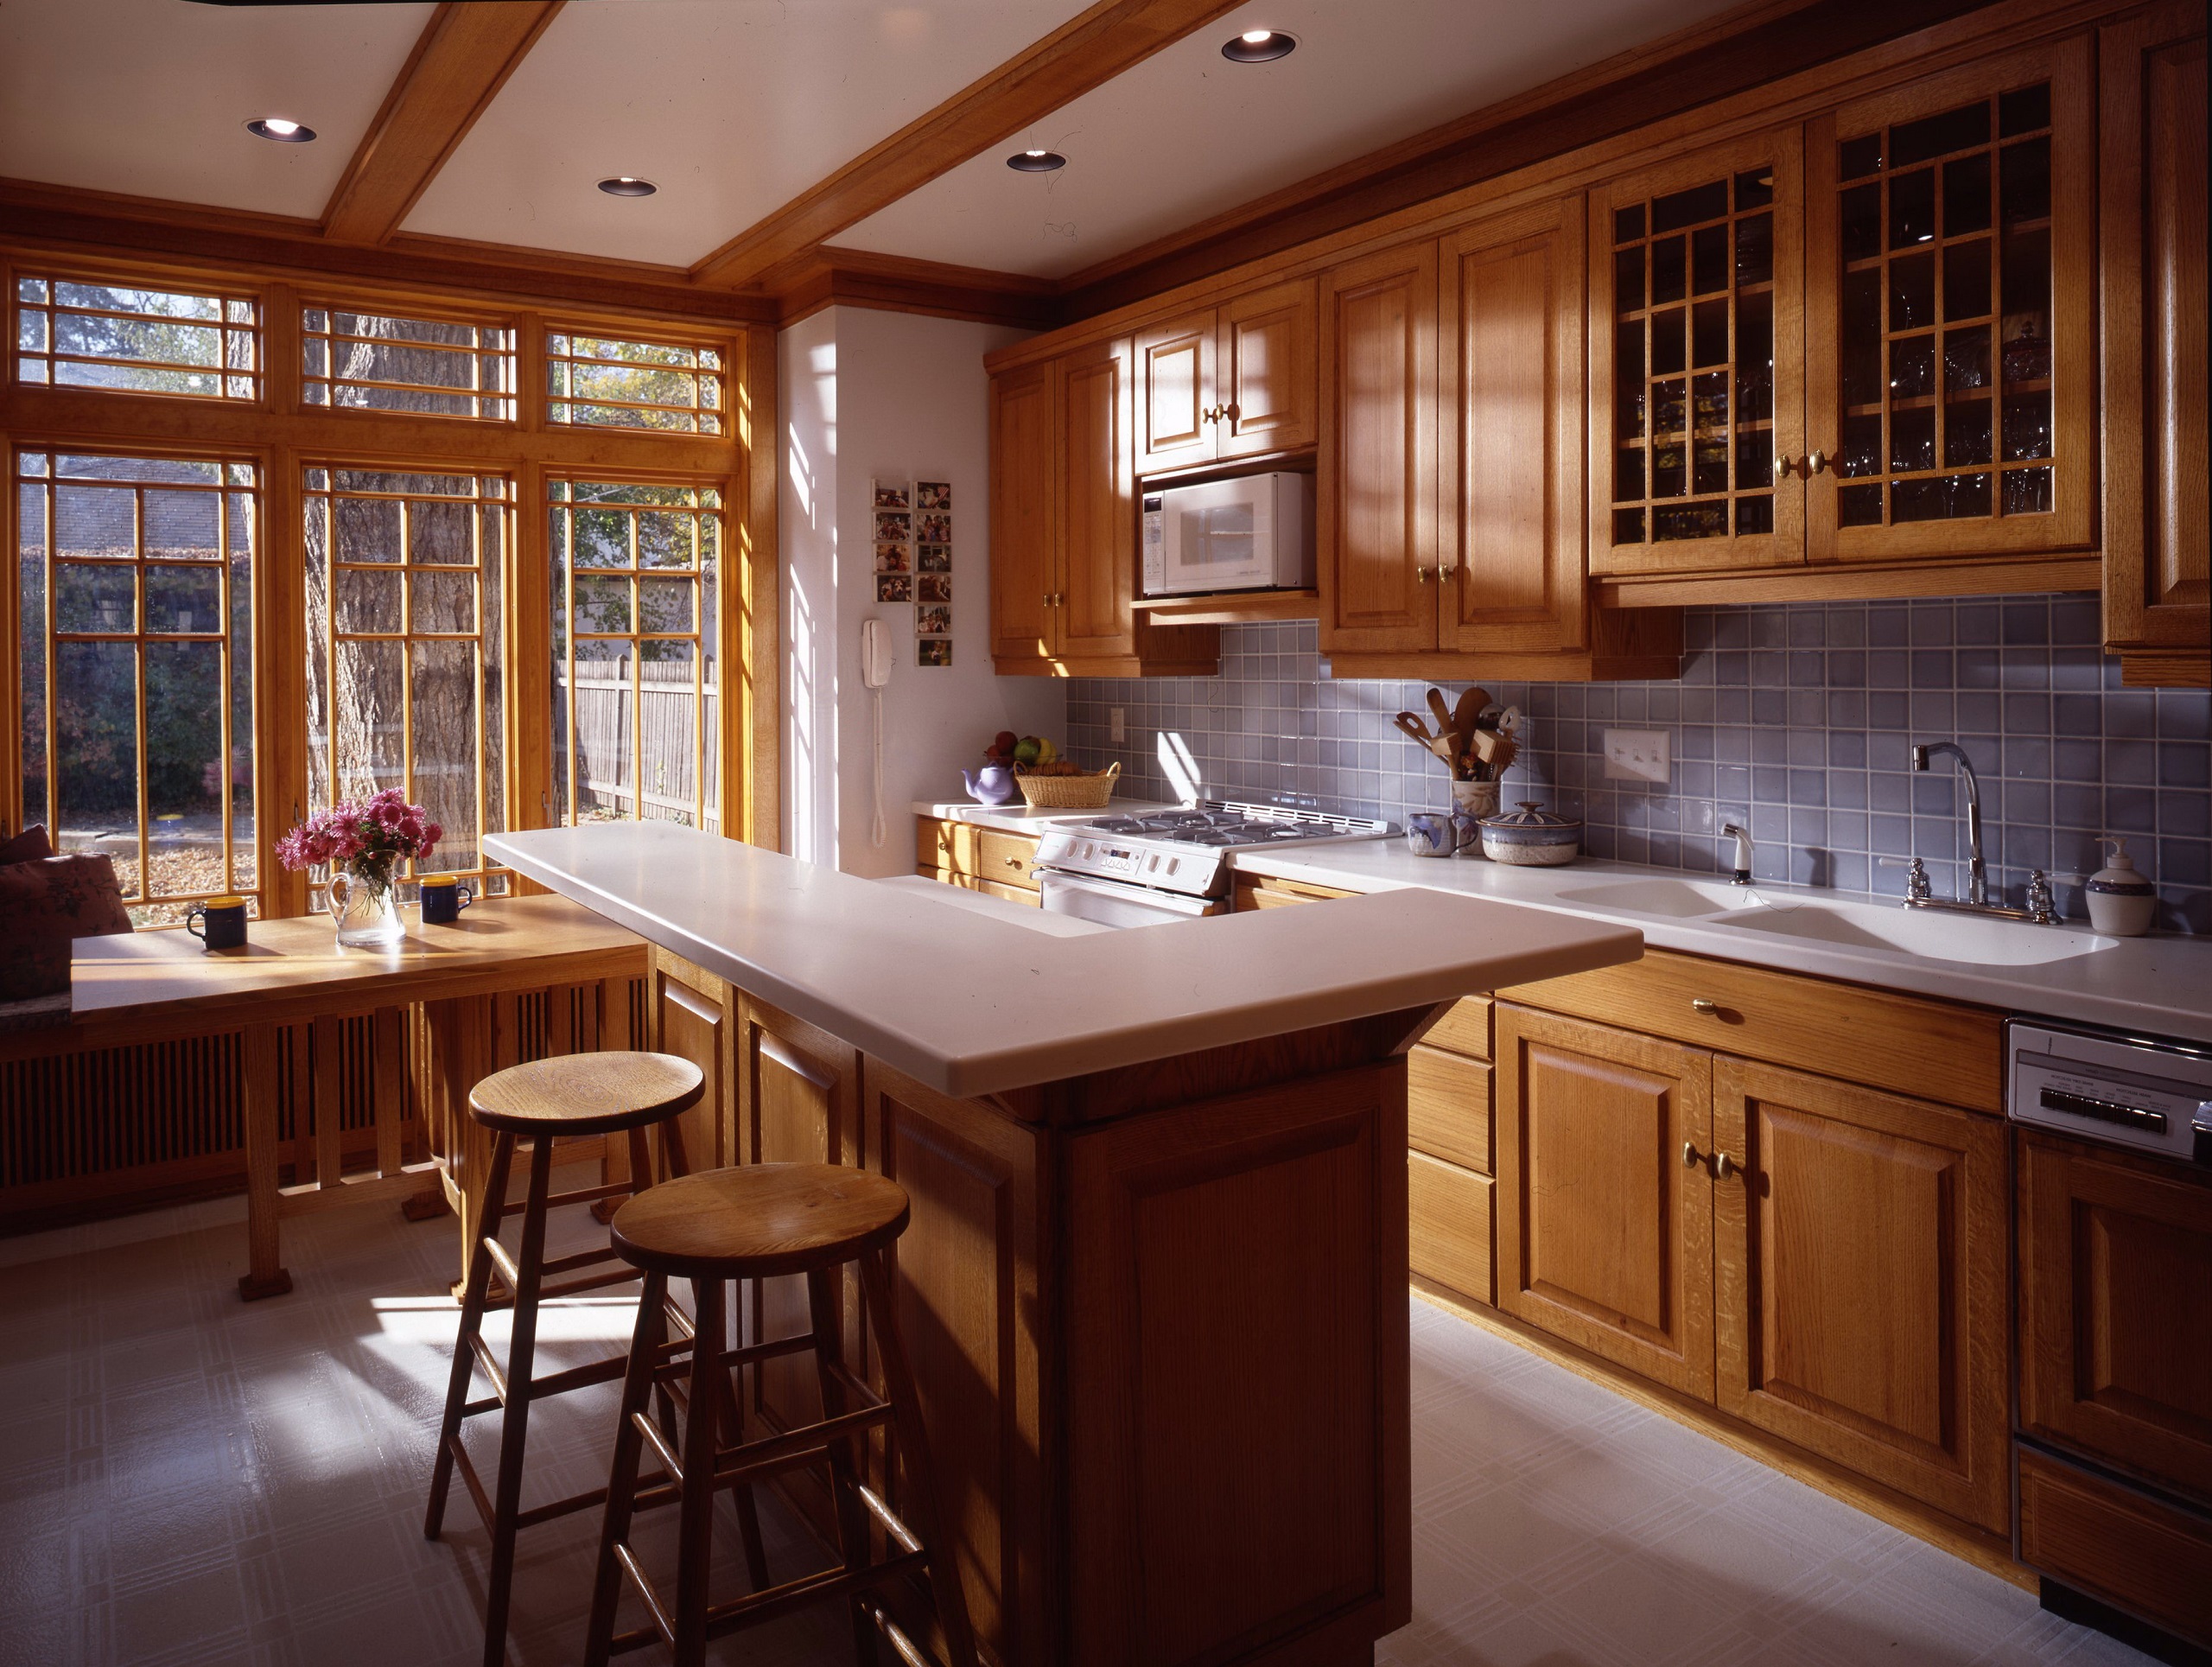 Large kitchen with white island, brown cabinets, big windows, and blue backsplash